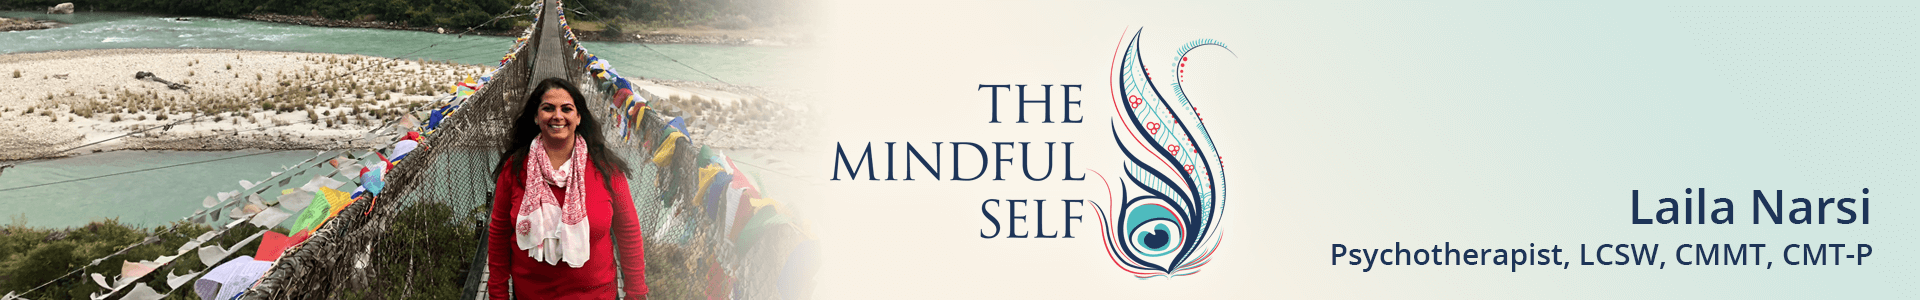 The Mindful Self